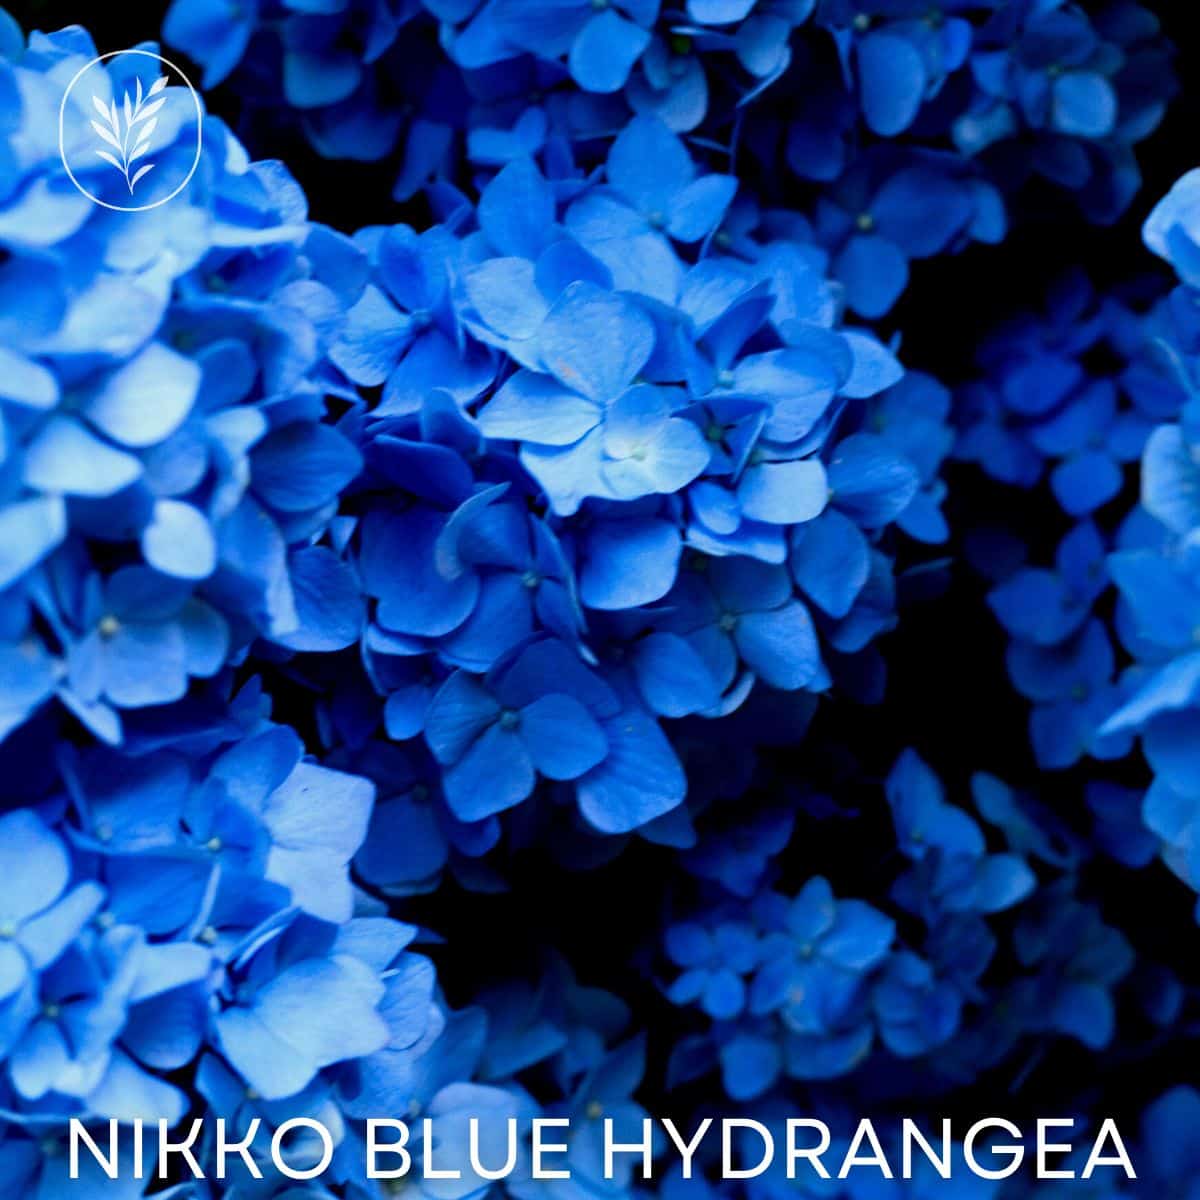 Nikko blue hydrangea via @home4theharvest